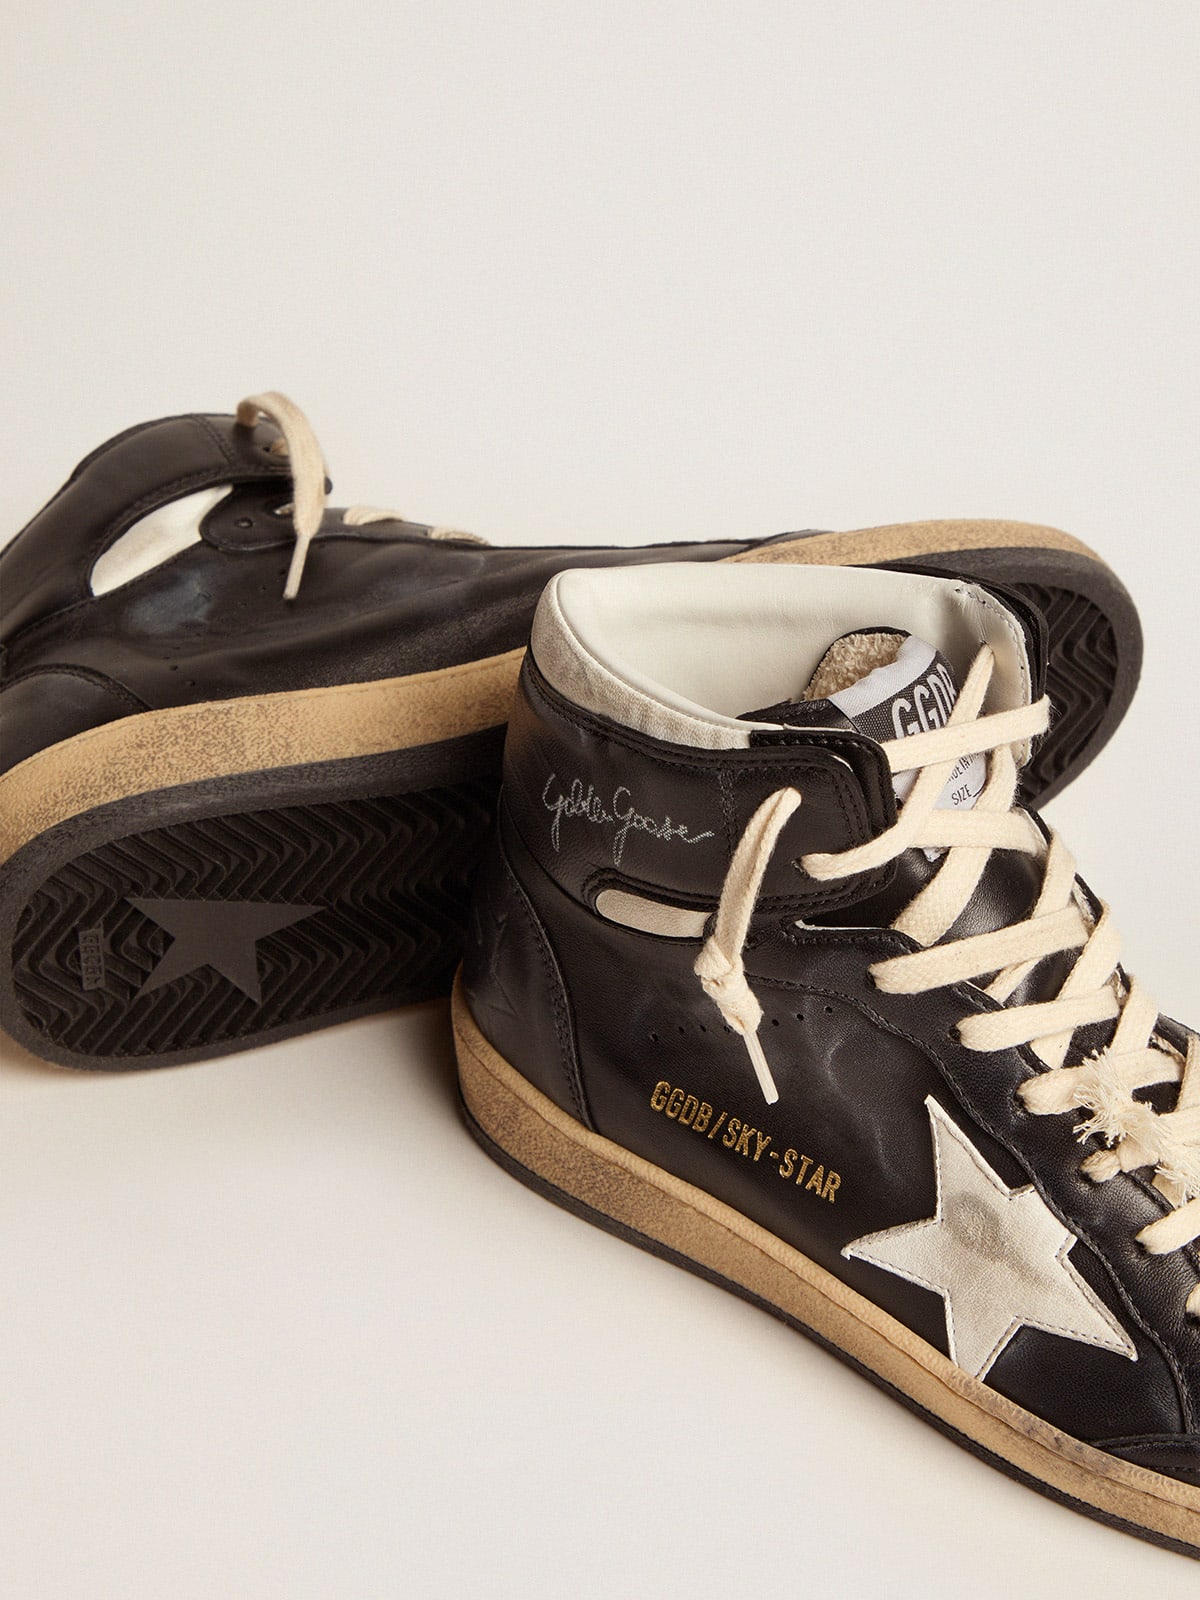 Golden Goose - Sneakers Sky-Star en cuir nappa noir avec étoile en cuir nappa blanc in 